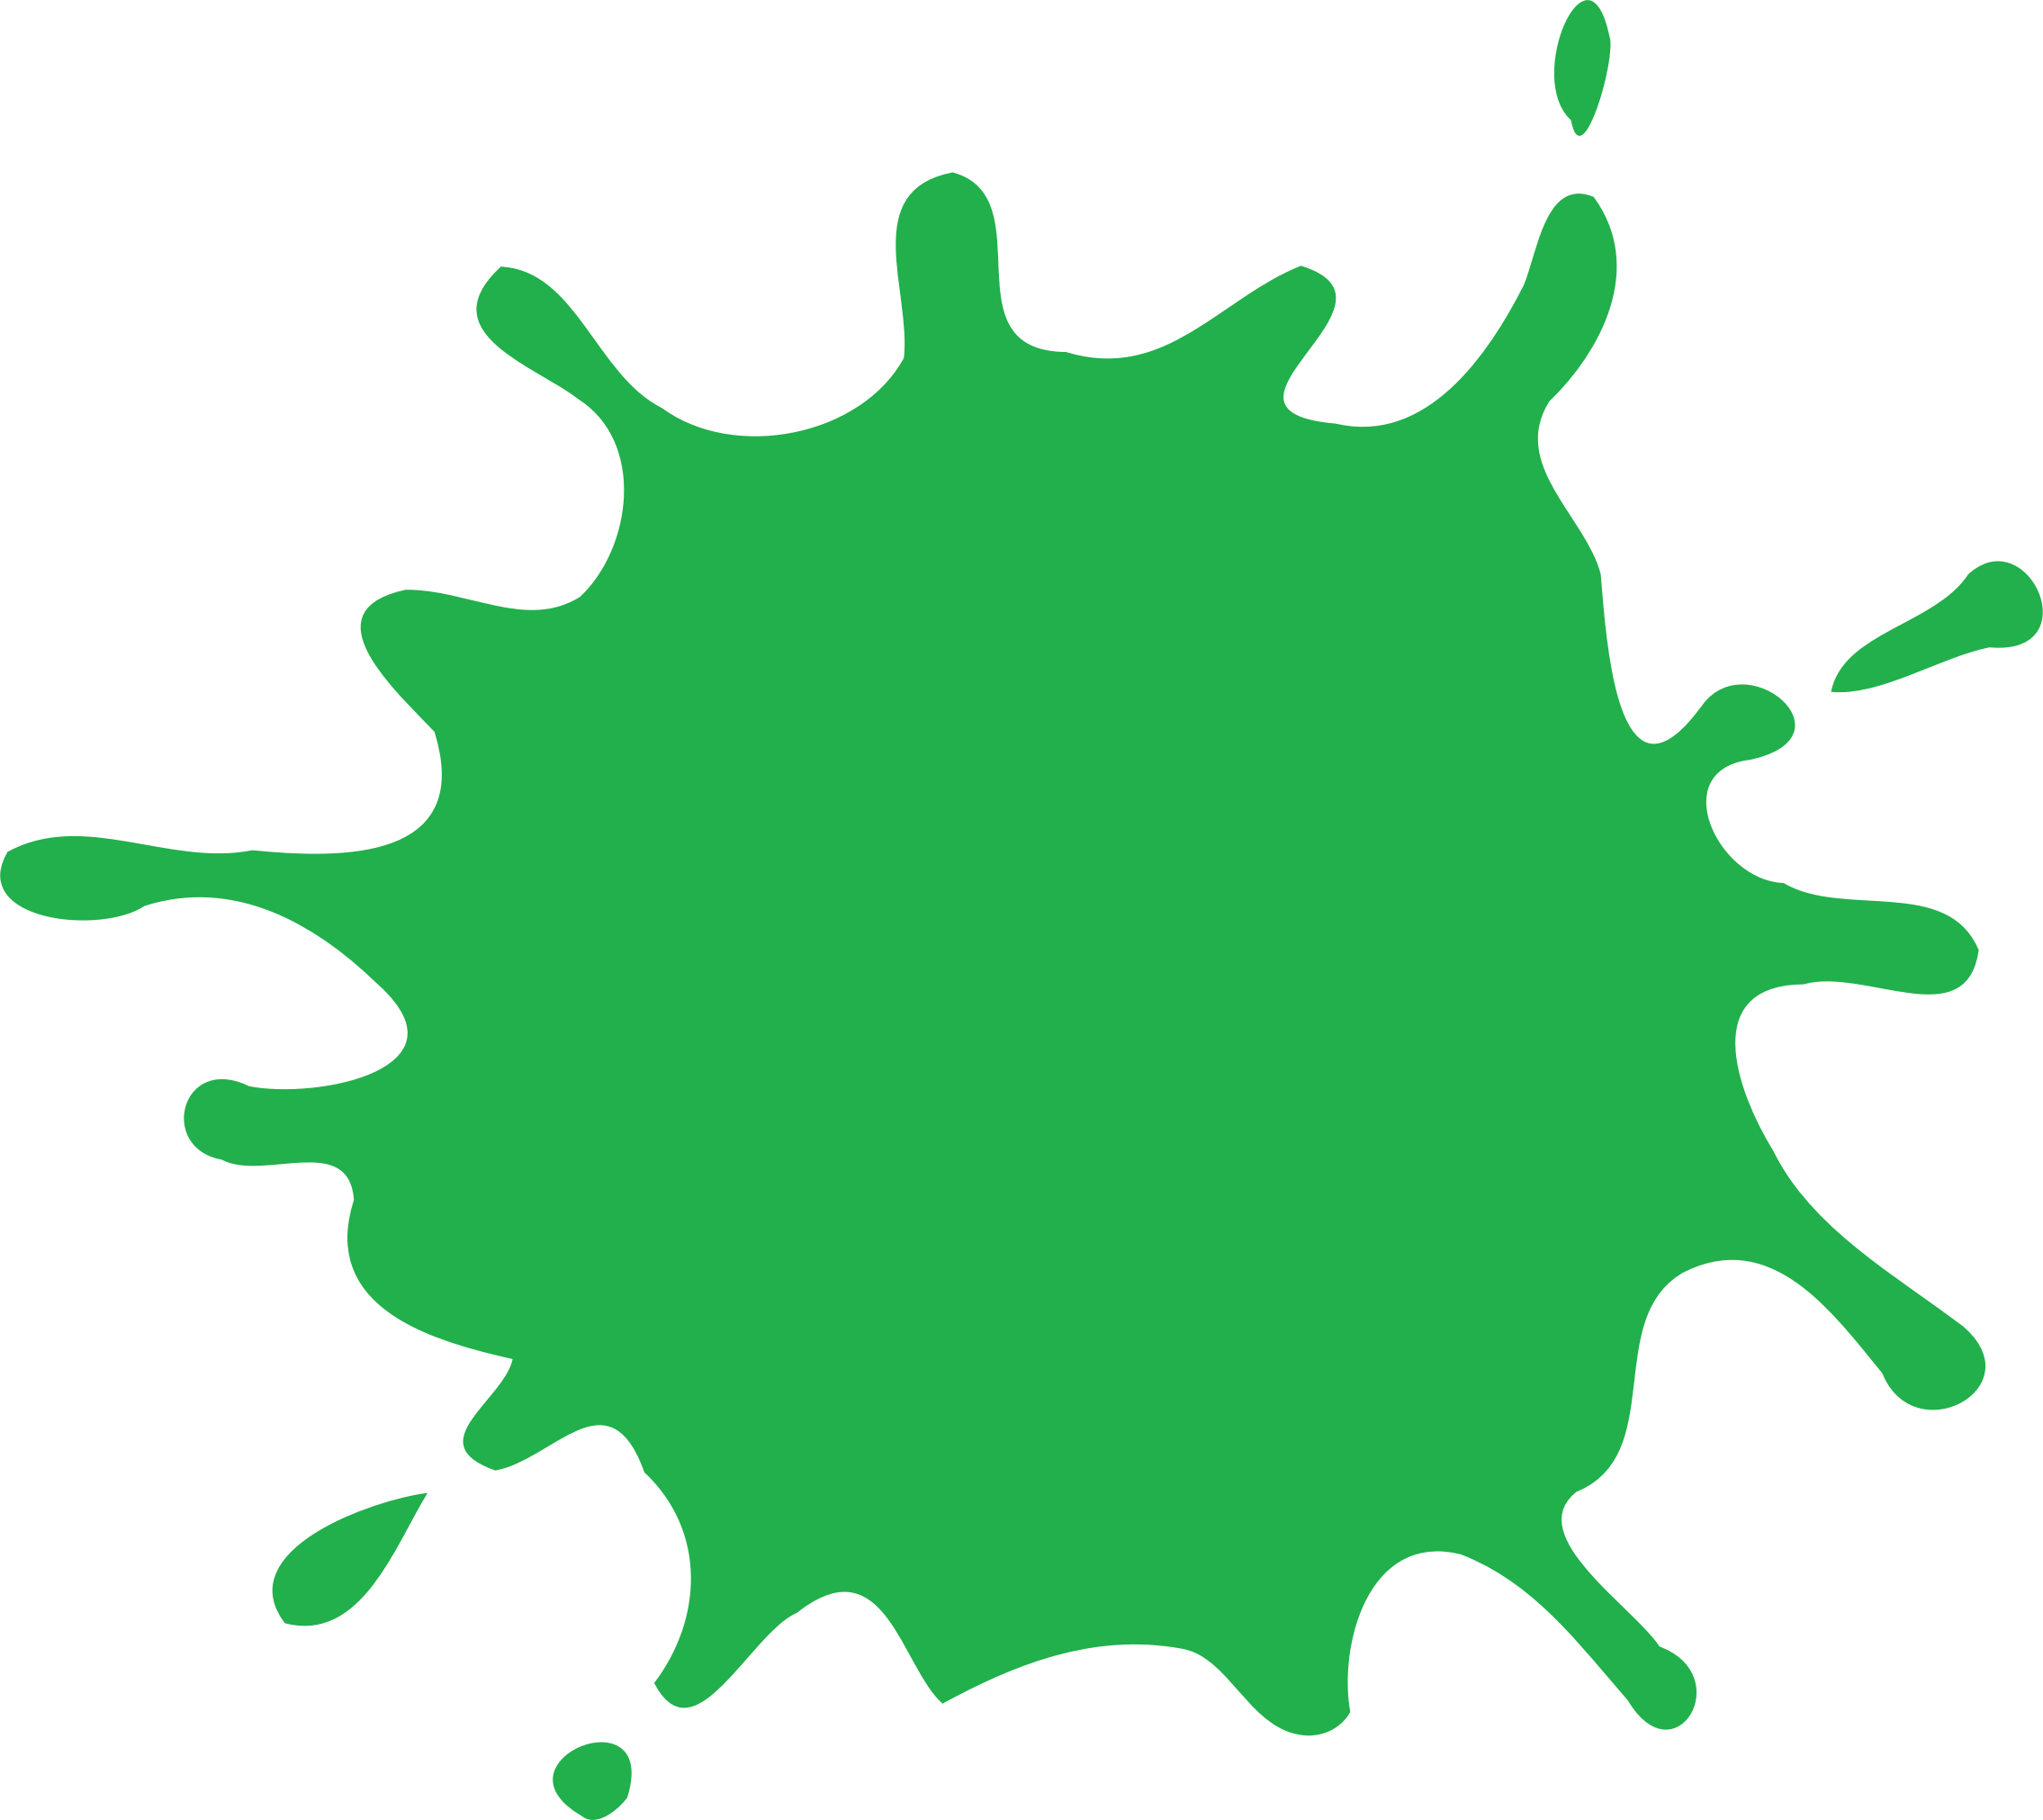 Green Splat Vector Clipart image